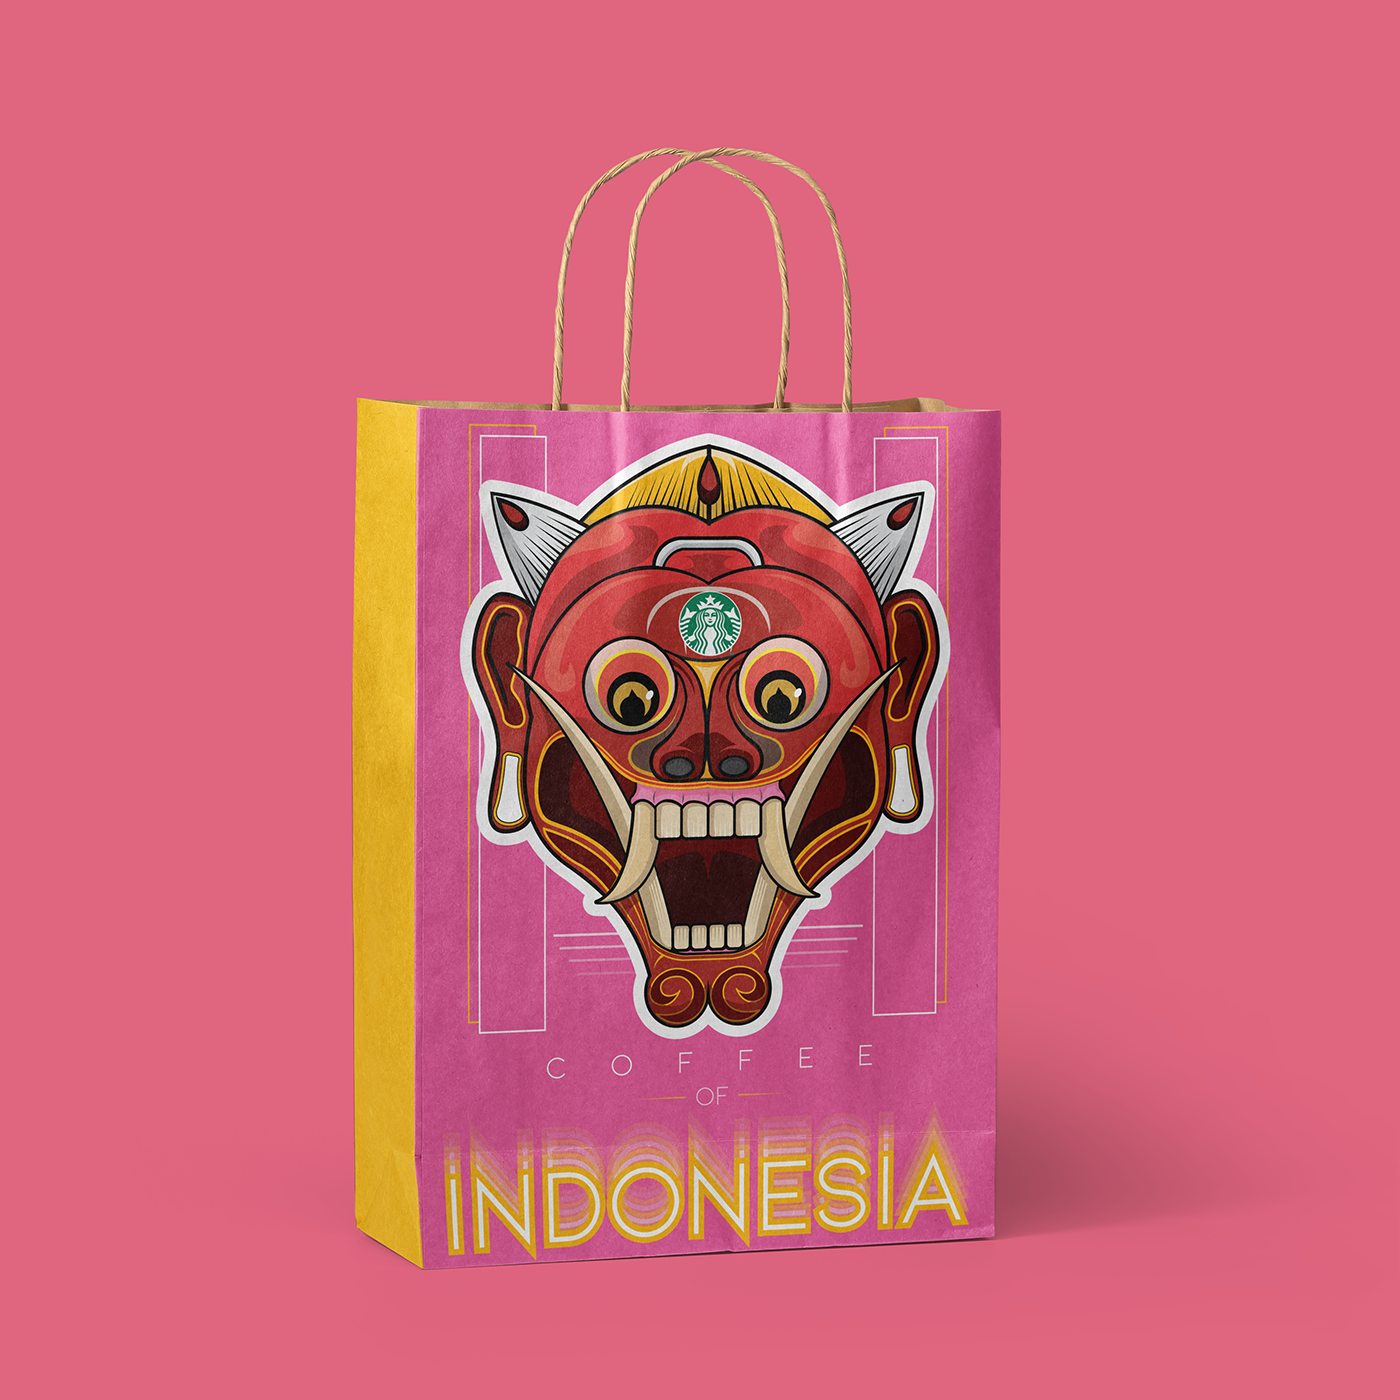 starbucks Coffee brand Create indonesia pink bright bag shop